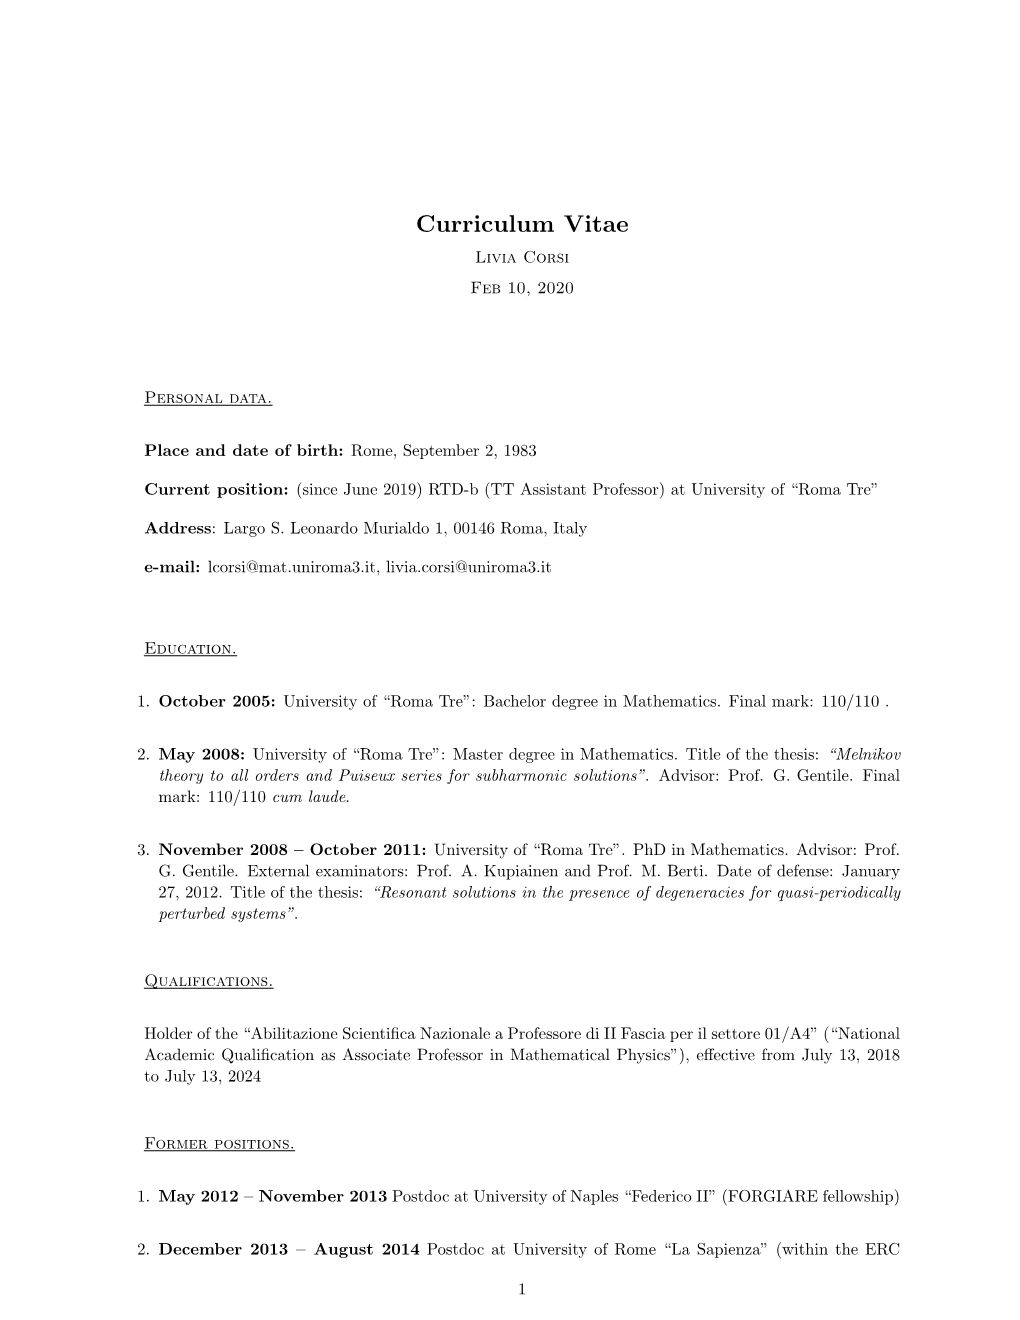 Curriculum Vitae Livia Corsi Feb 10, 2020